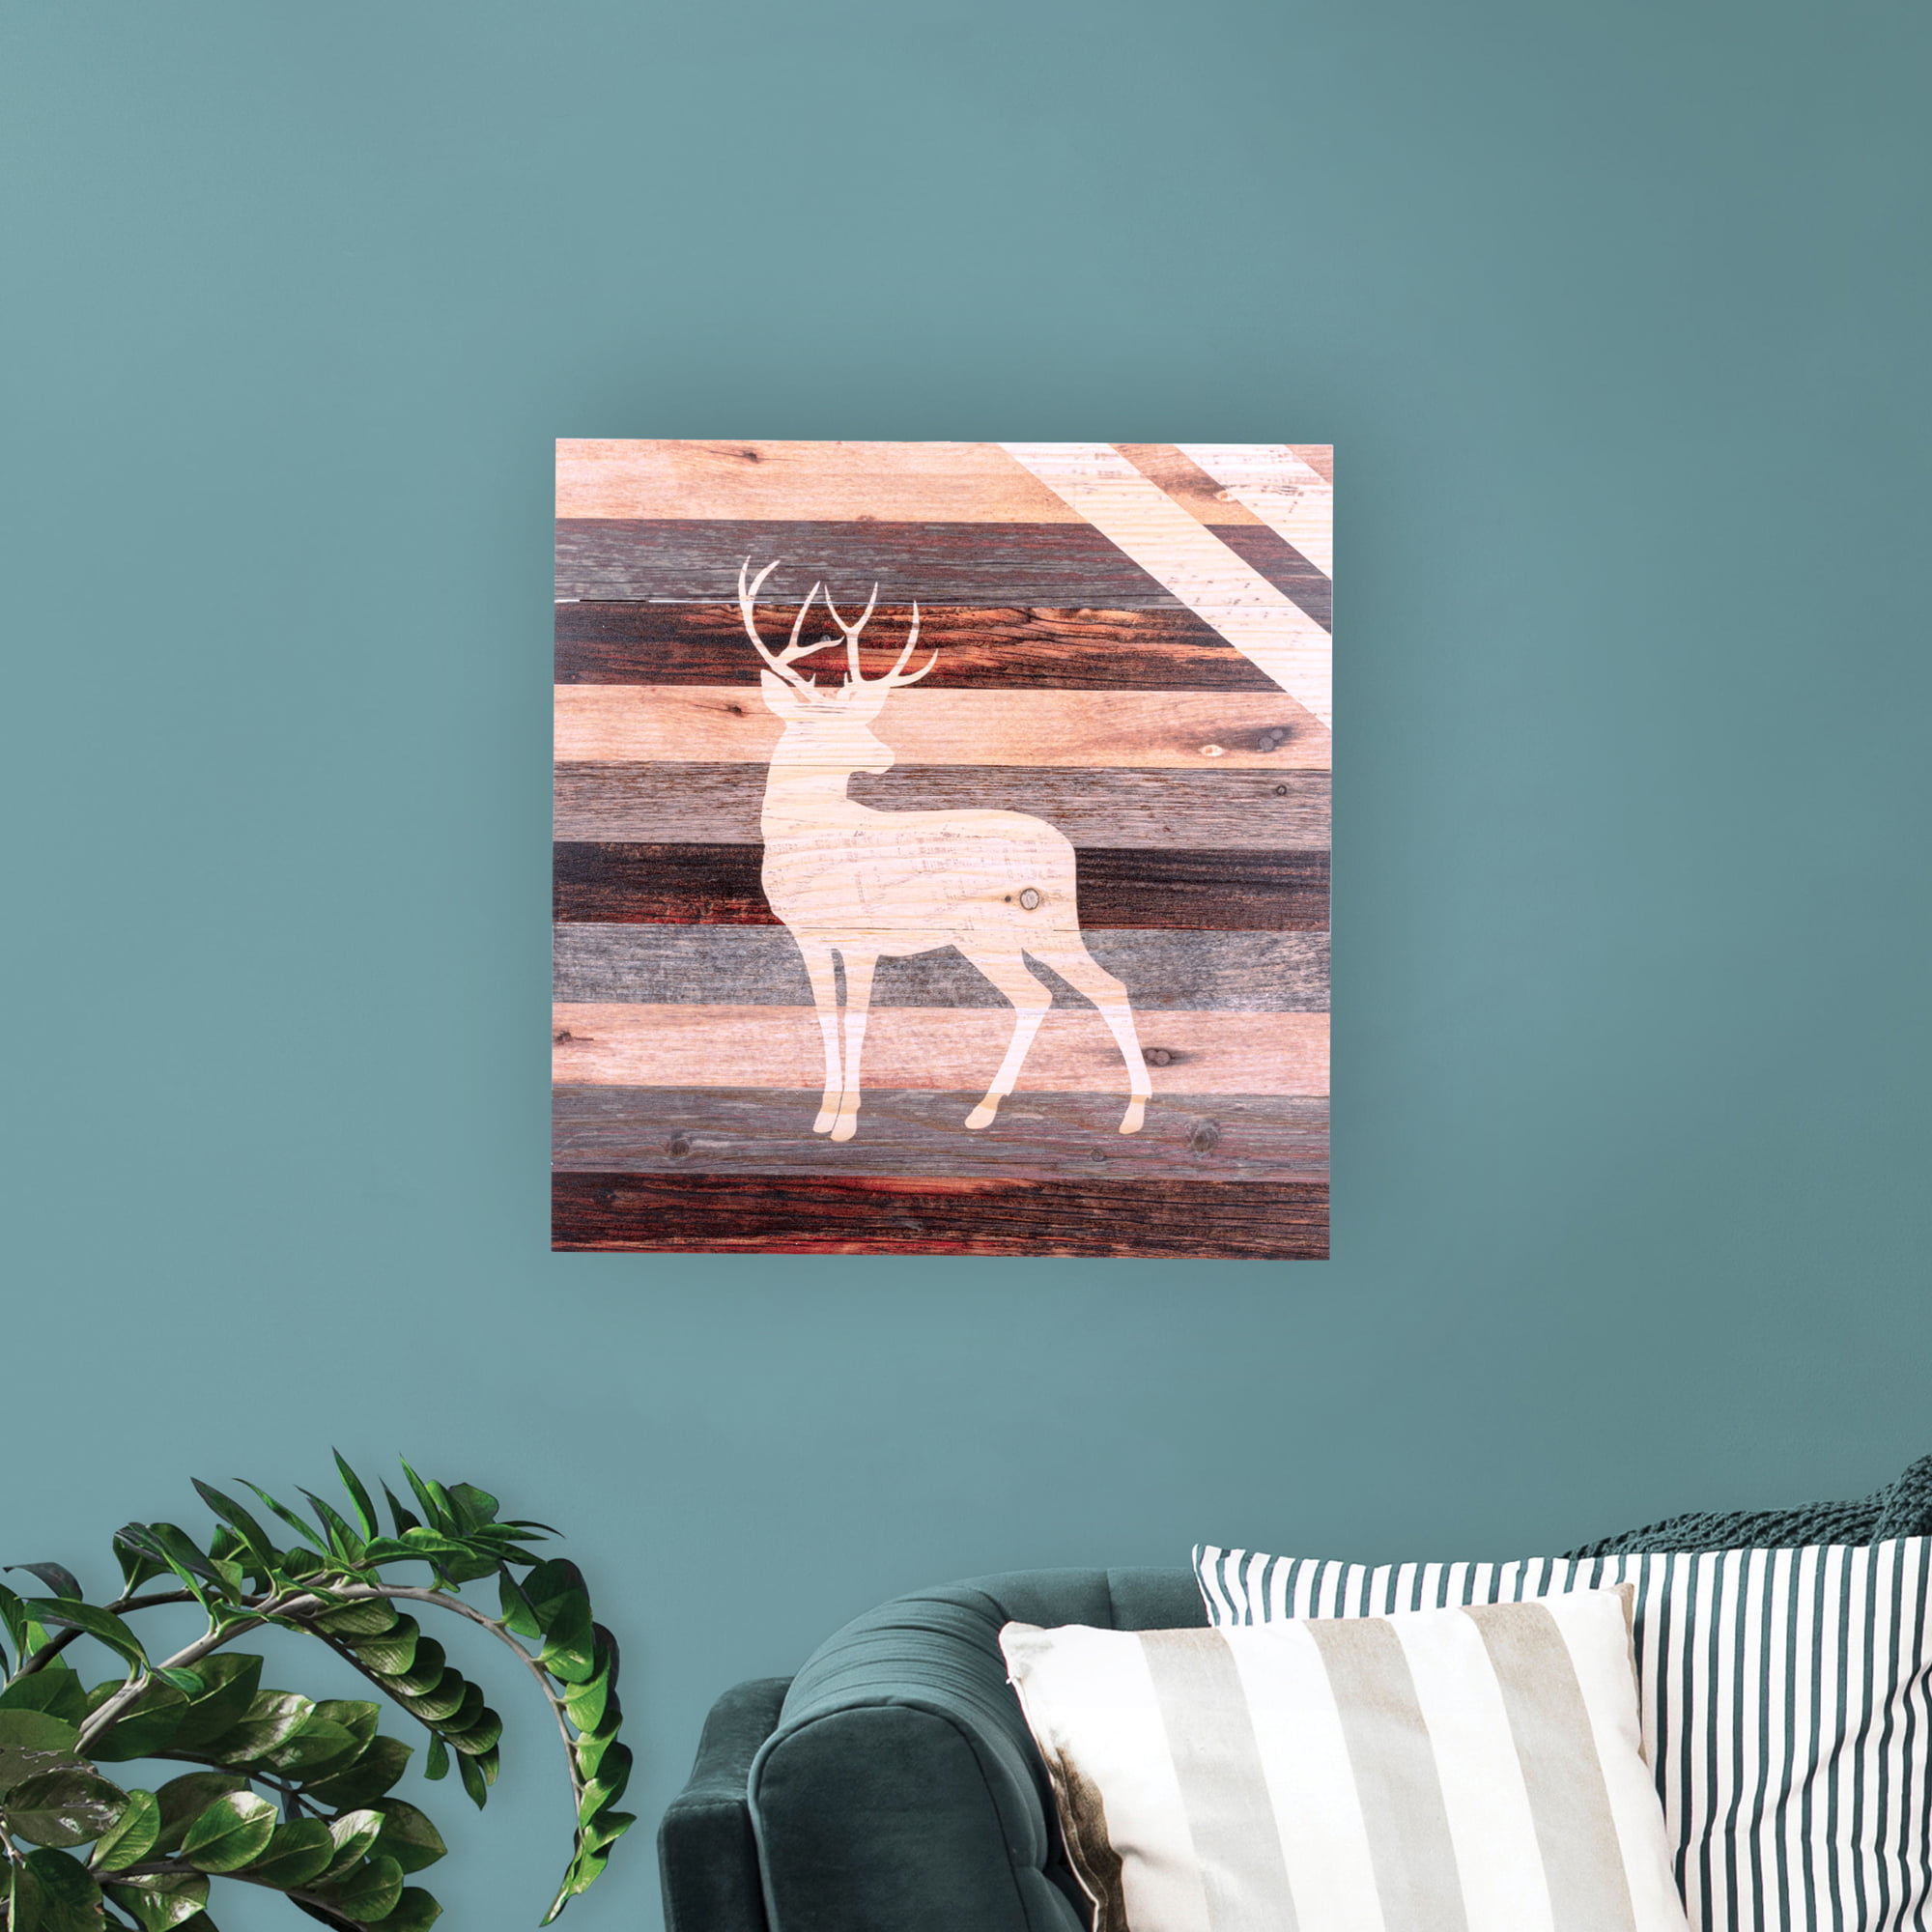 PRINTS Deer Wall Art (W 40 x H 50 x D 2.5 cm)